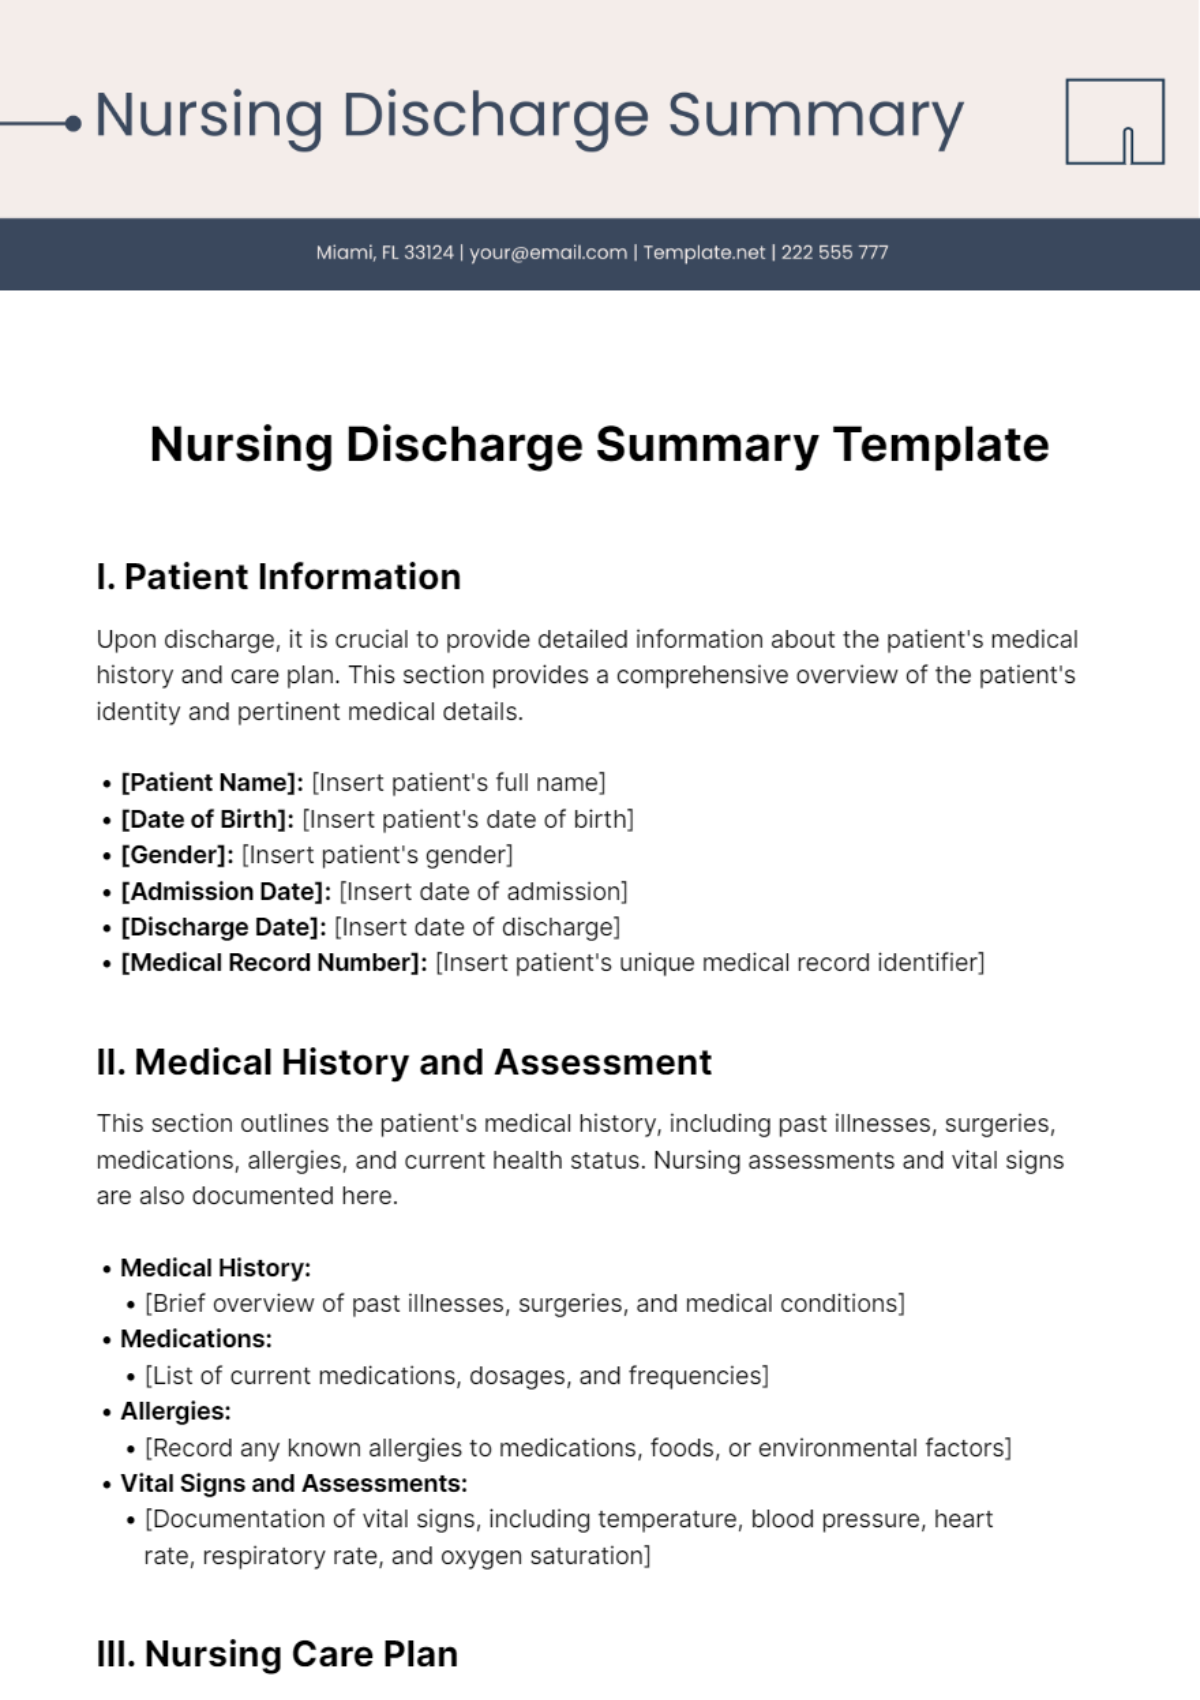 Free Nursing Discharge Summary Template